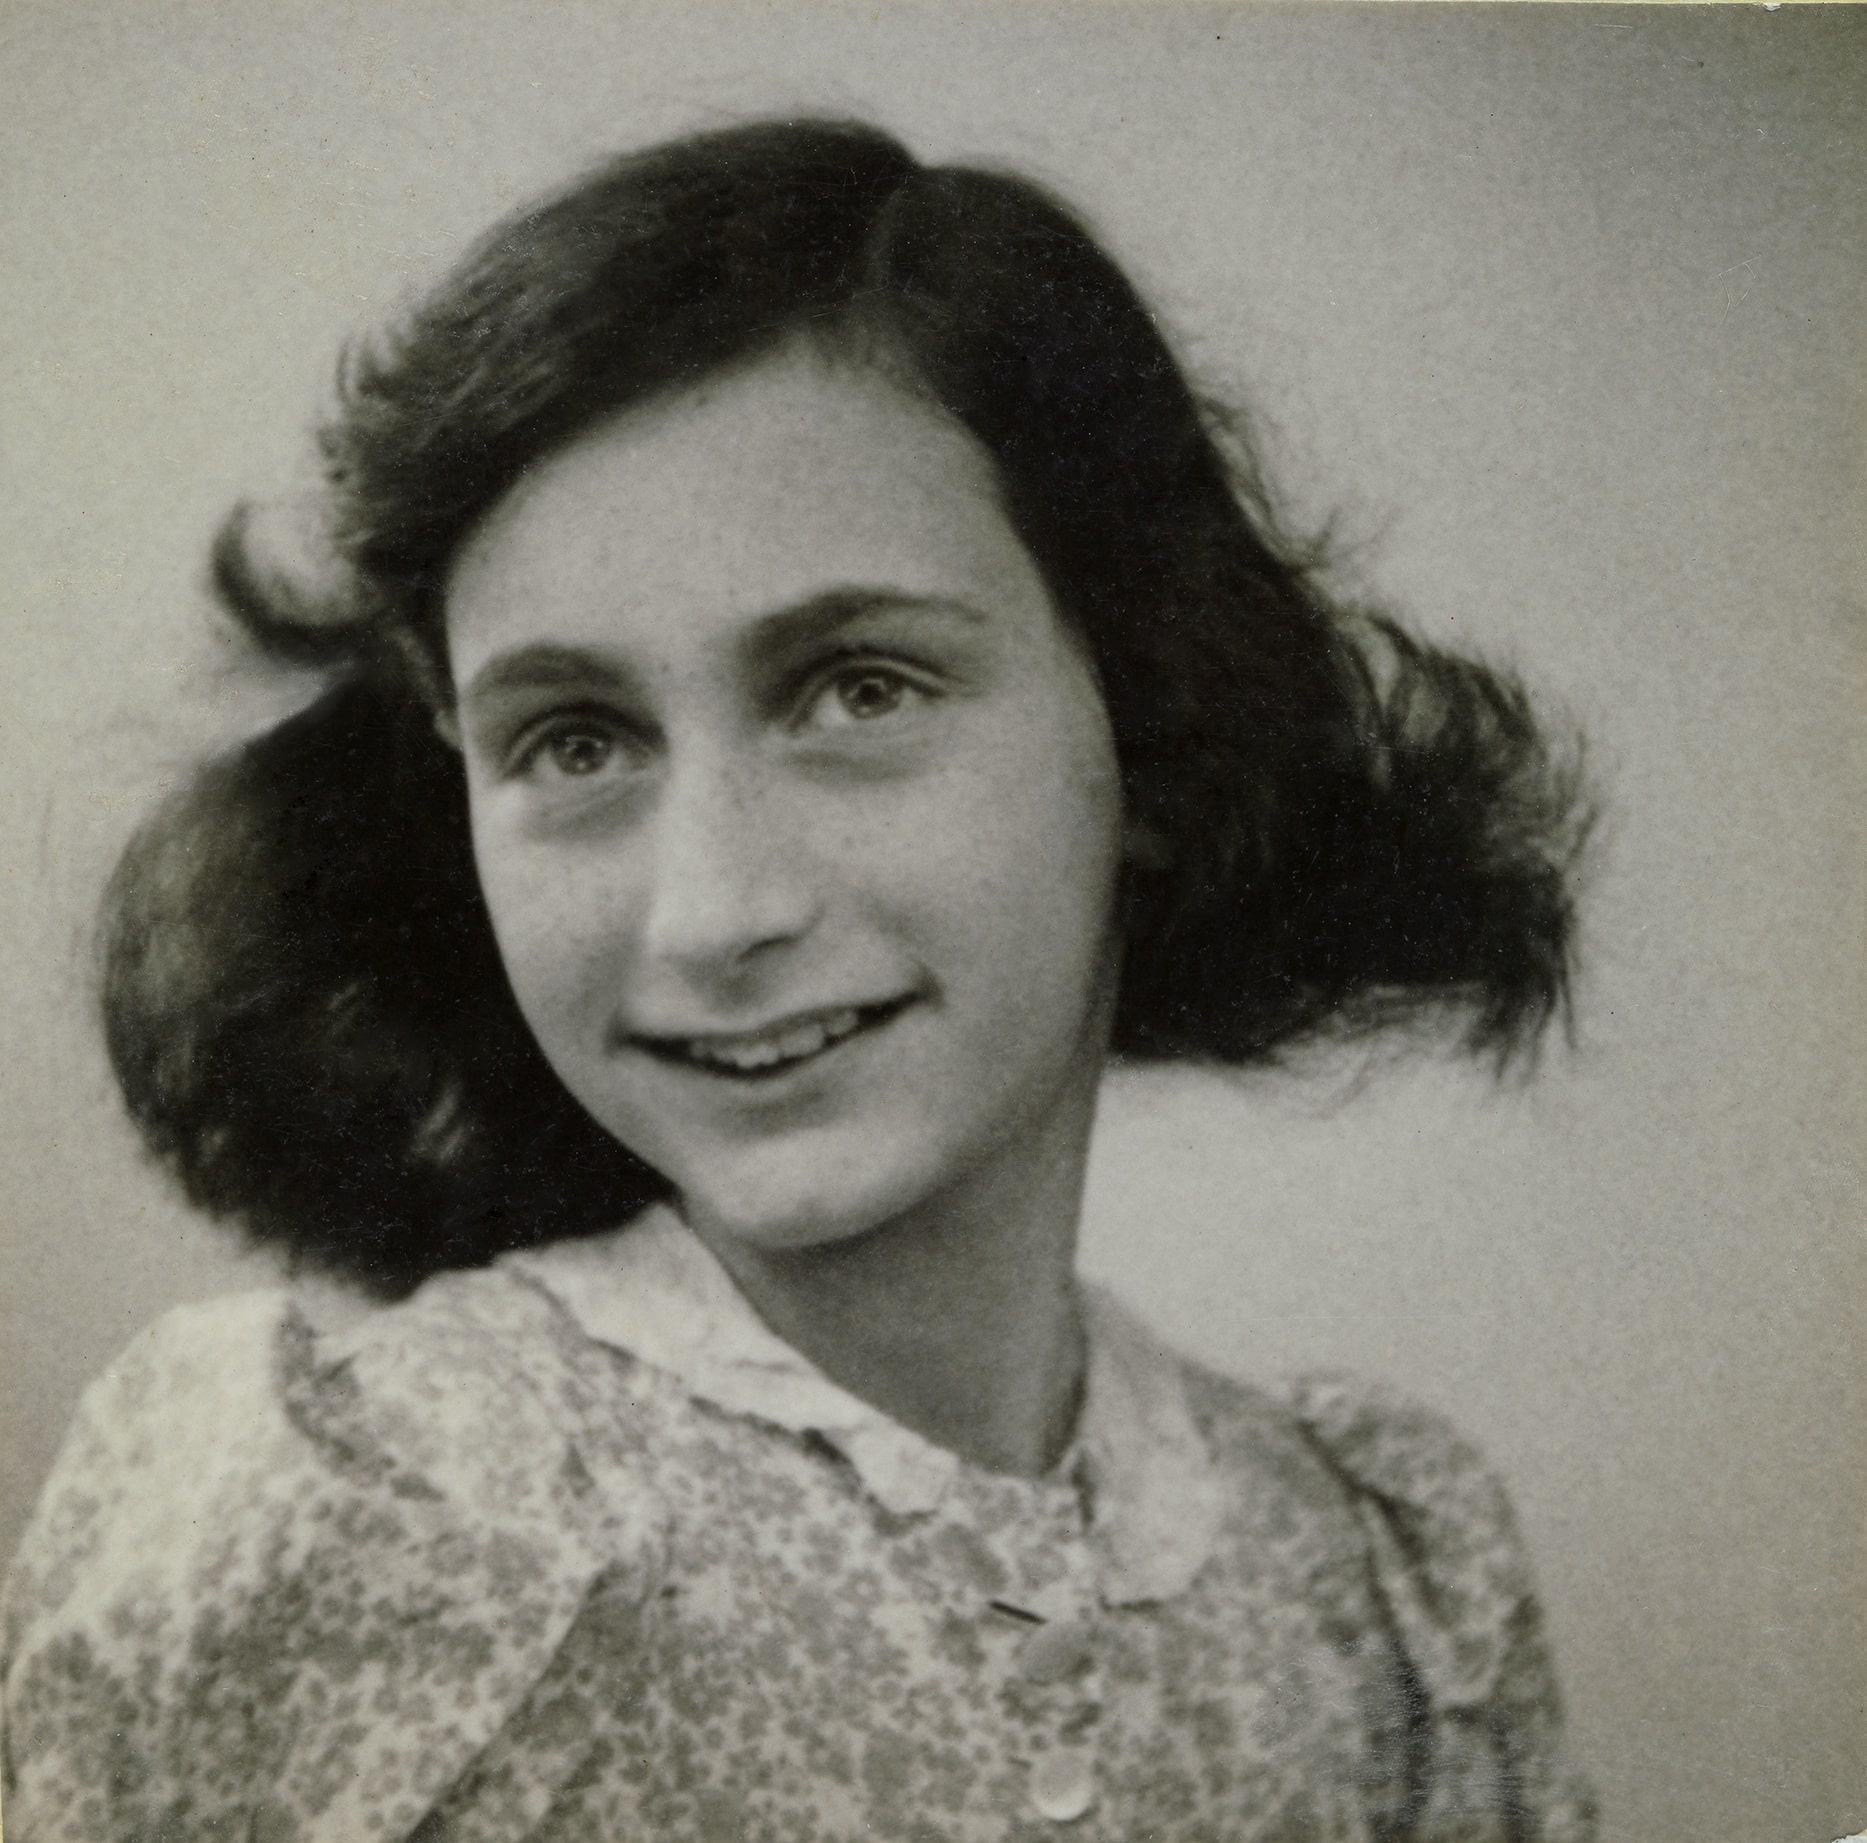 Headshot of Anne Frank